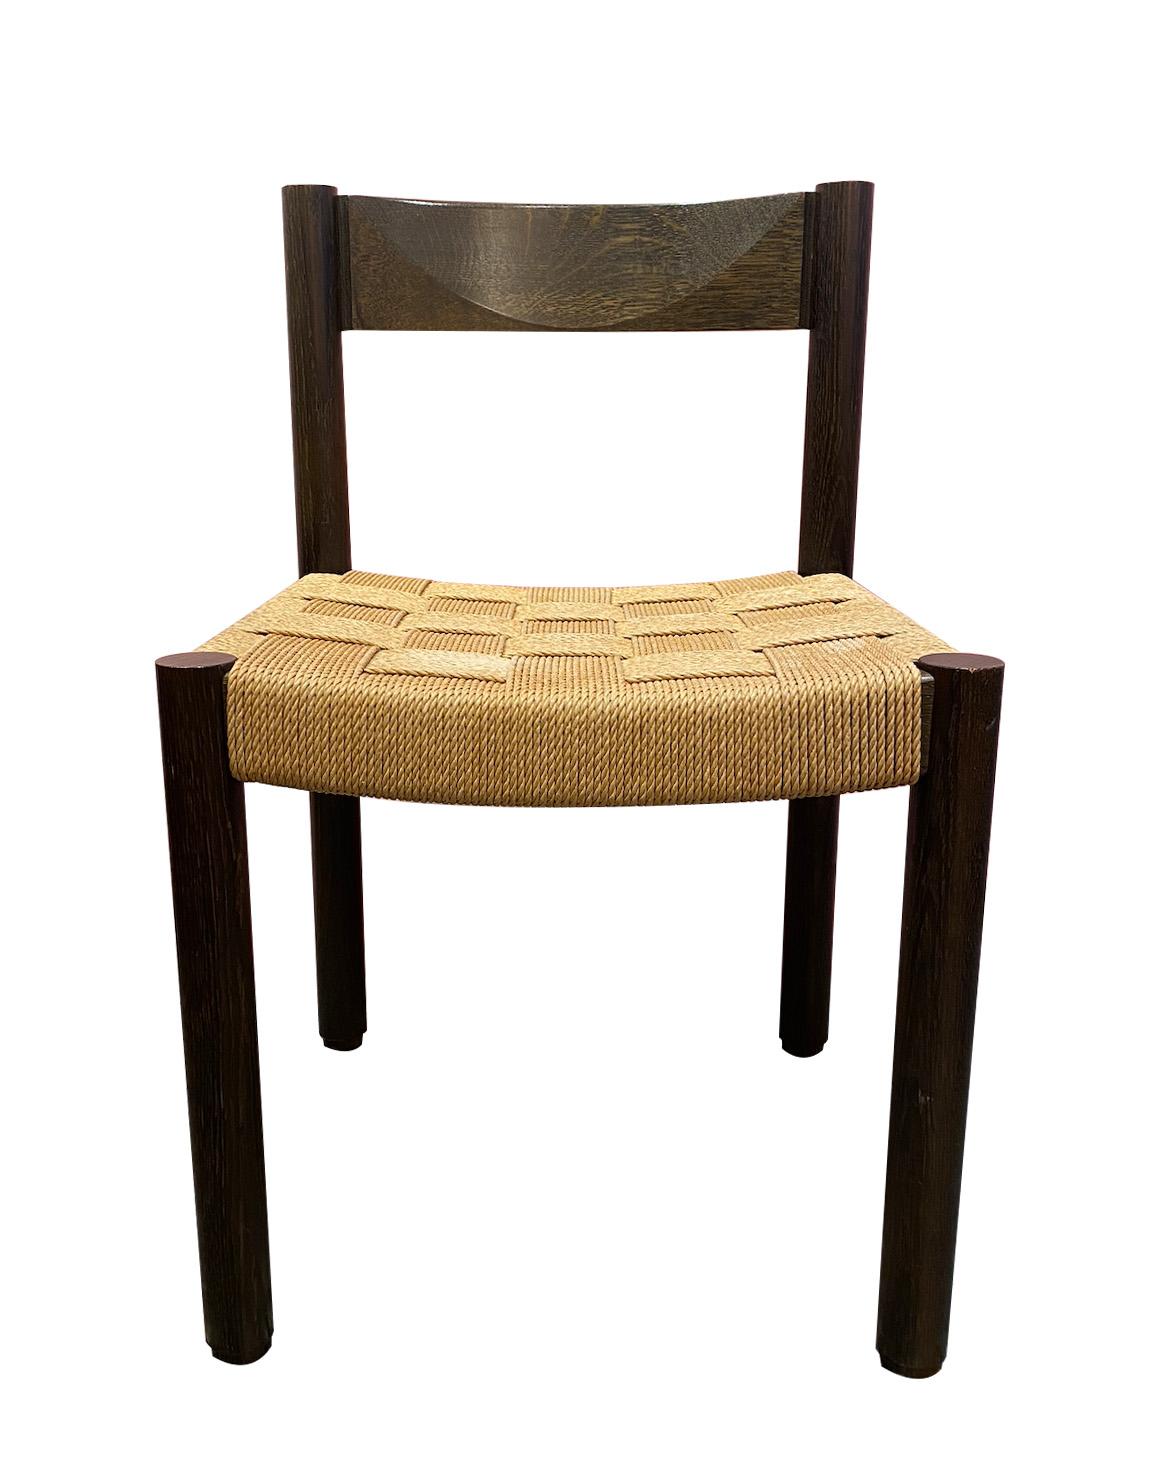 Hand-Woven Set of 4 dining chairs by Robert Haussmann for Dietiker, Circa 1960.